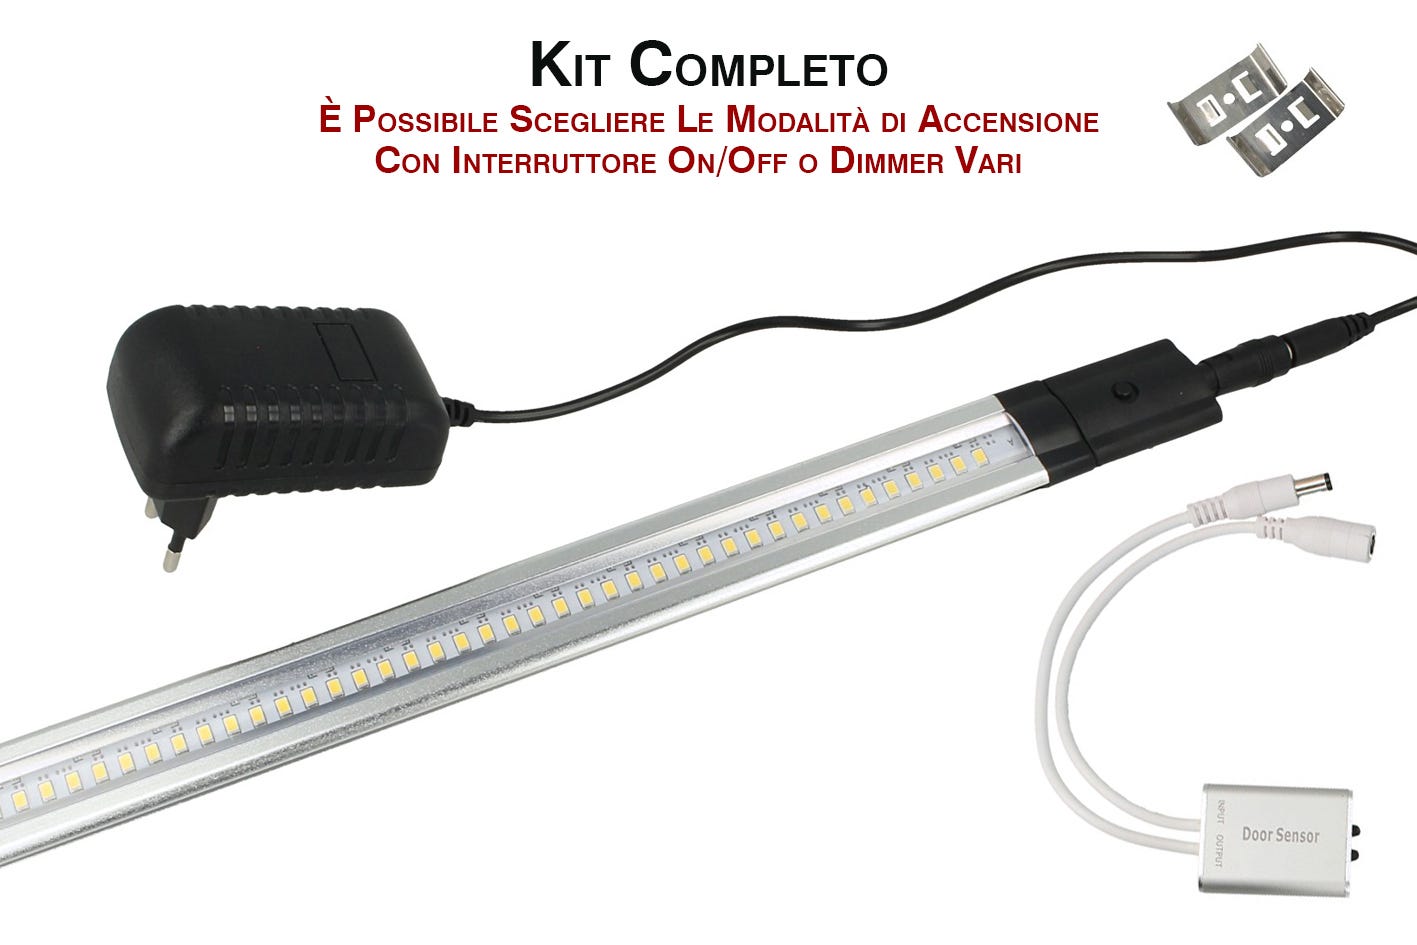 Kit Barra Led Con Sensore Door Apertura Anta 50cm Luce Calda Alimentatore  Compreso Per Cucina Sottopensile Mobile ect.